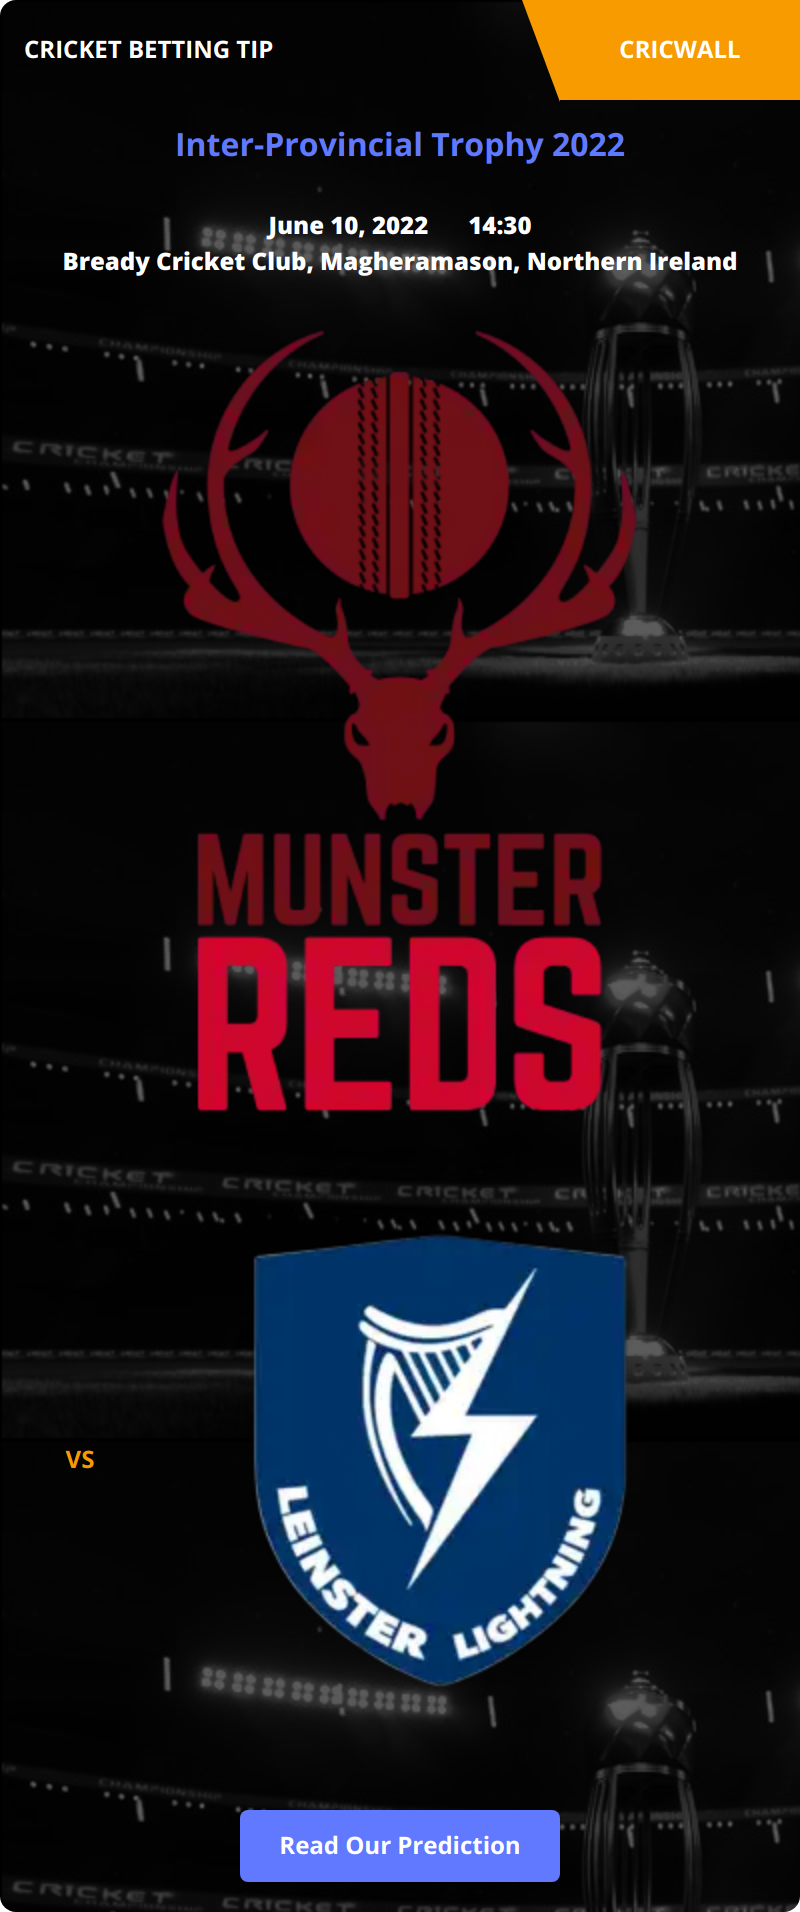 Munster Reds VS Leinster Lightning Match Prediction 10 June 2022